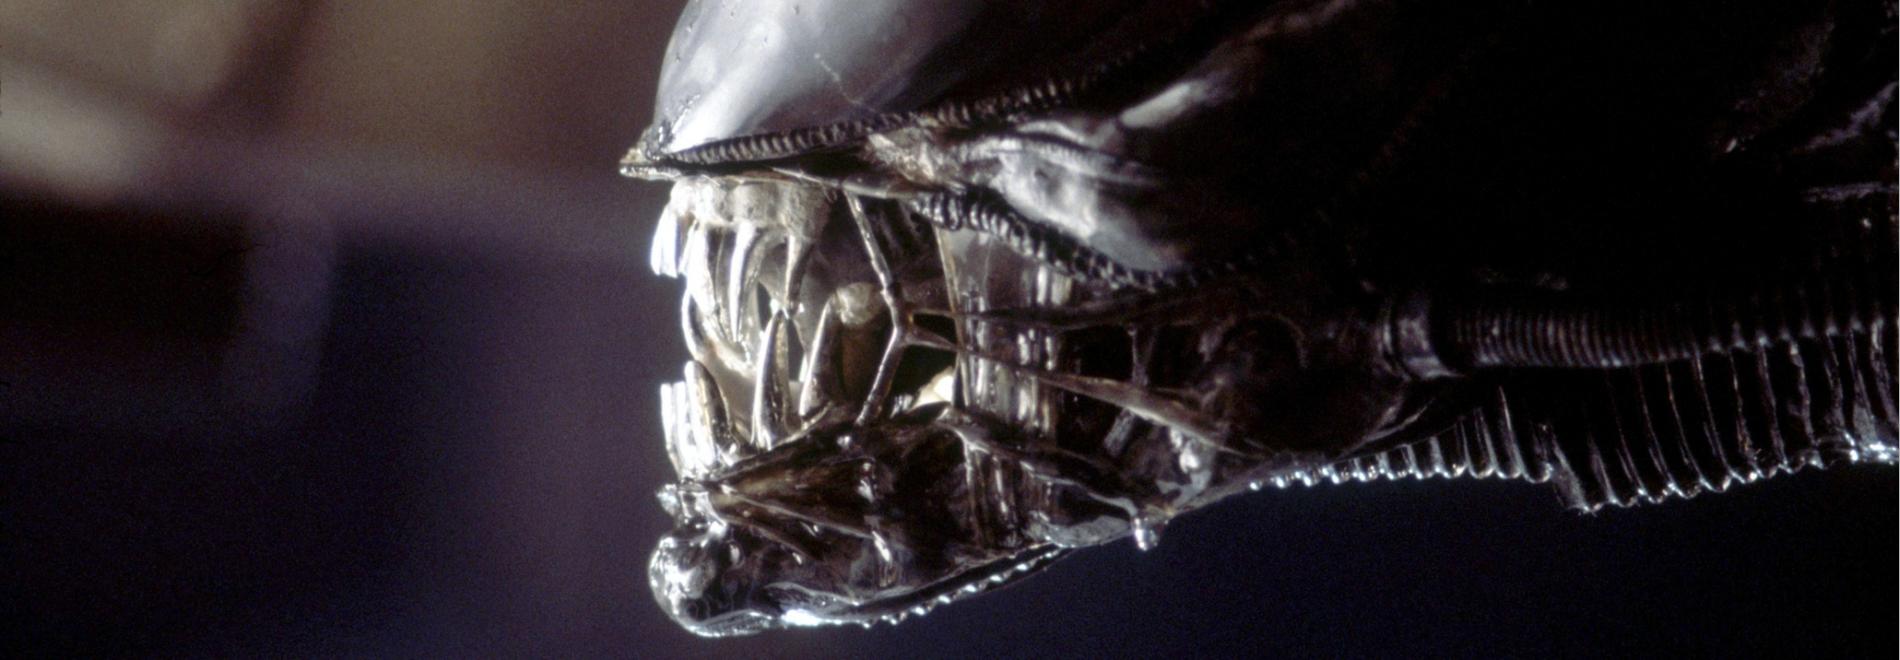 Alien (Ridley Scott, 1979)